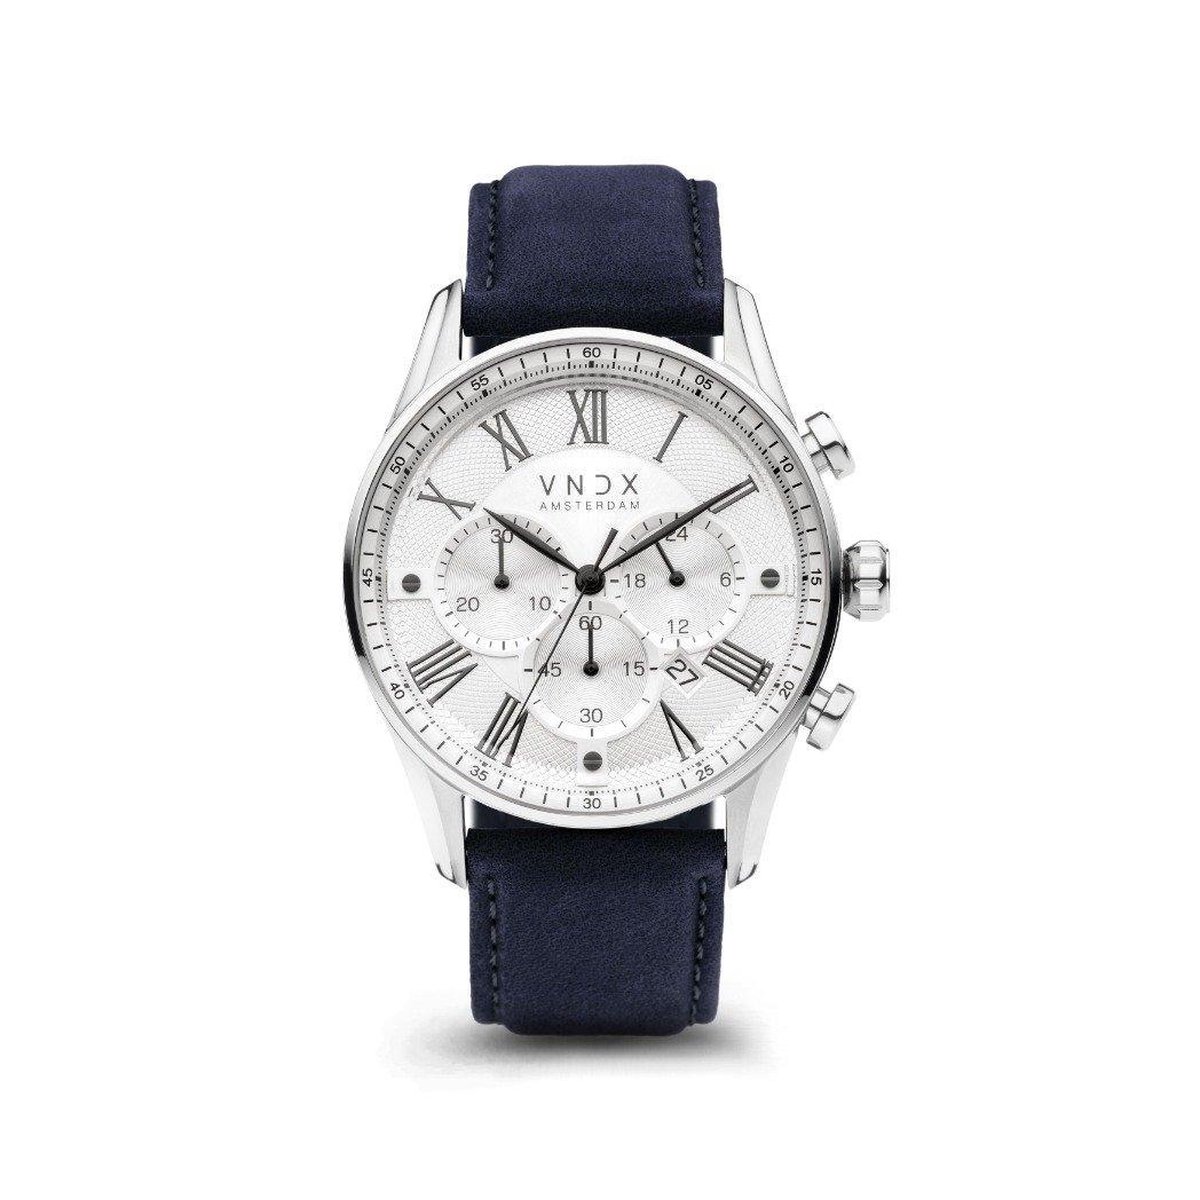 VNDX Amsterdam - Horloge voor mannen - The Chief Wit Leder Blauw